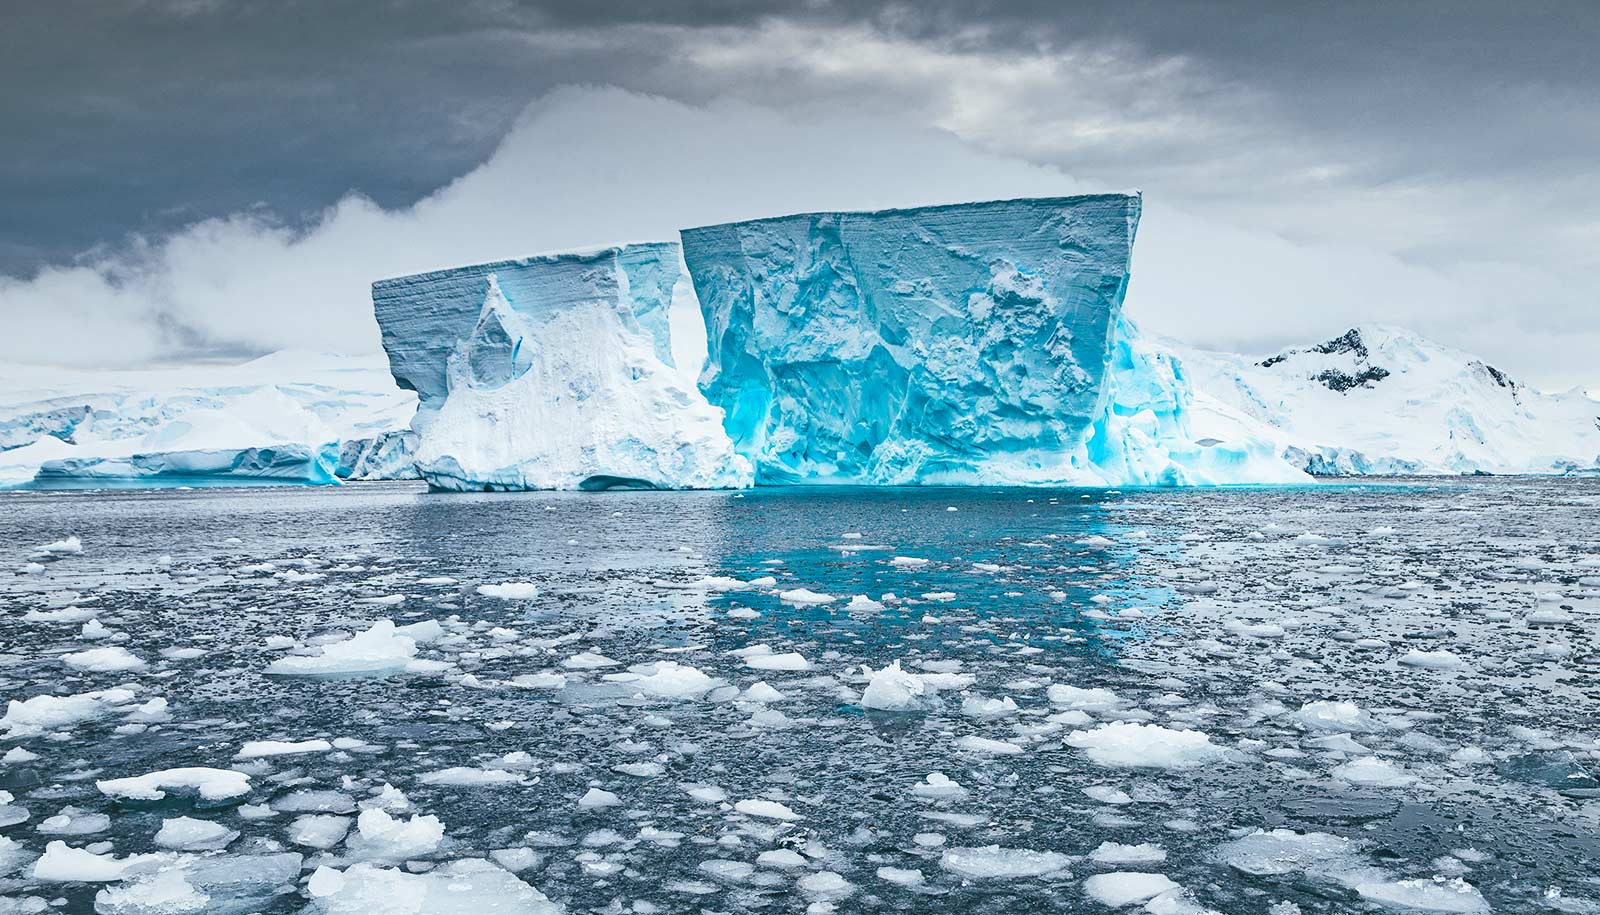 Antarctic sea warming contributes to rising sea levels in North Atlantic